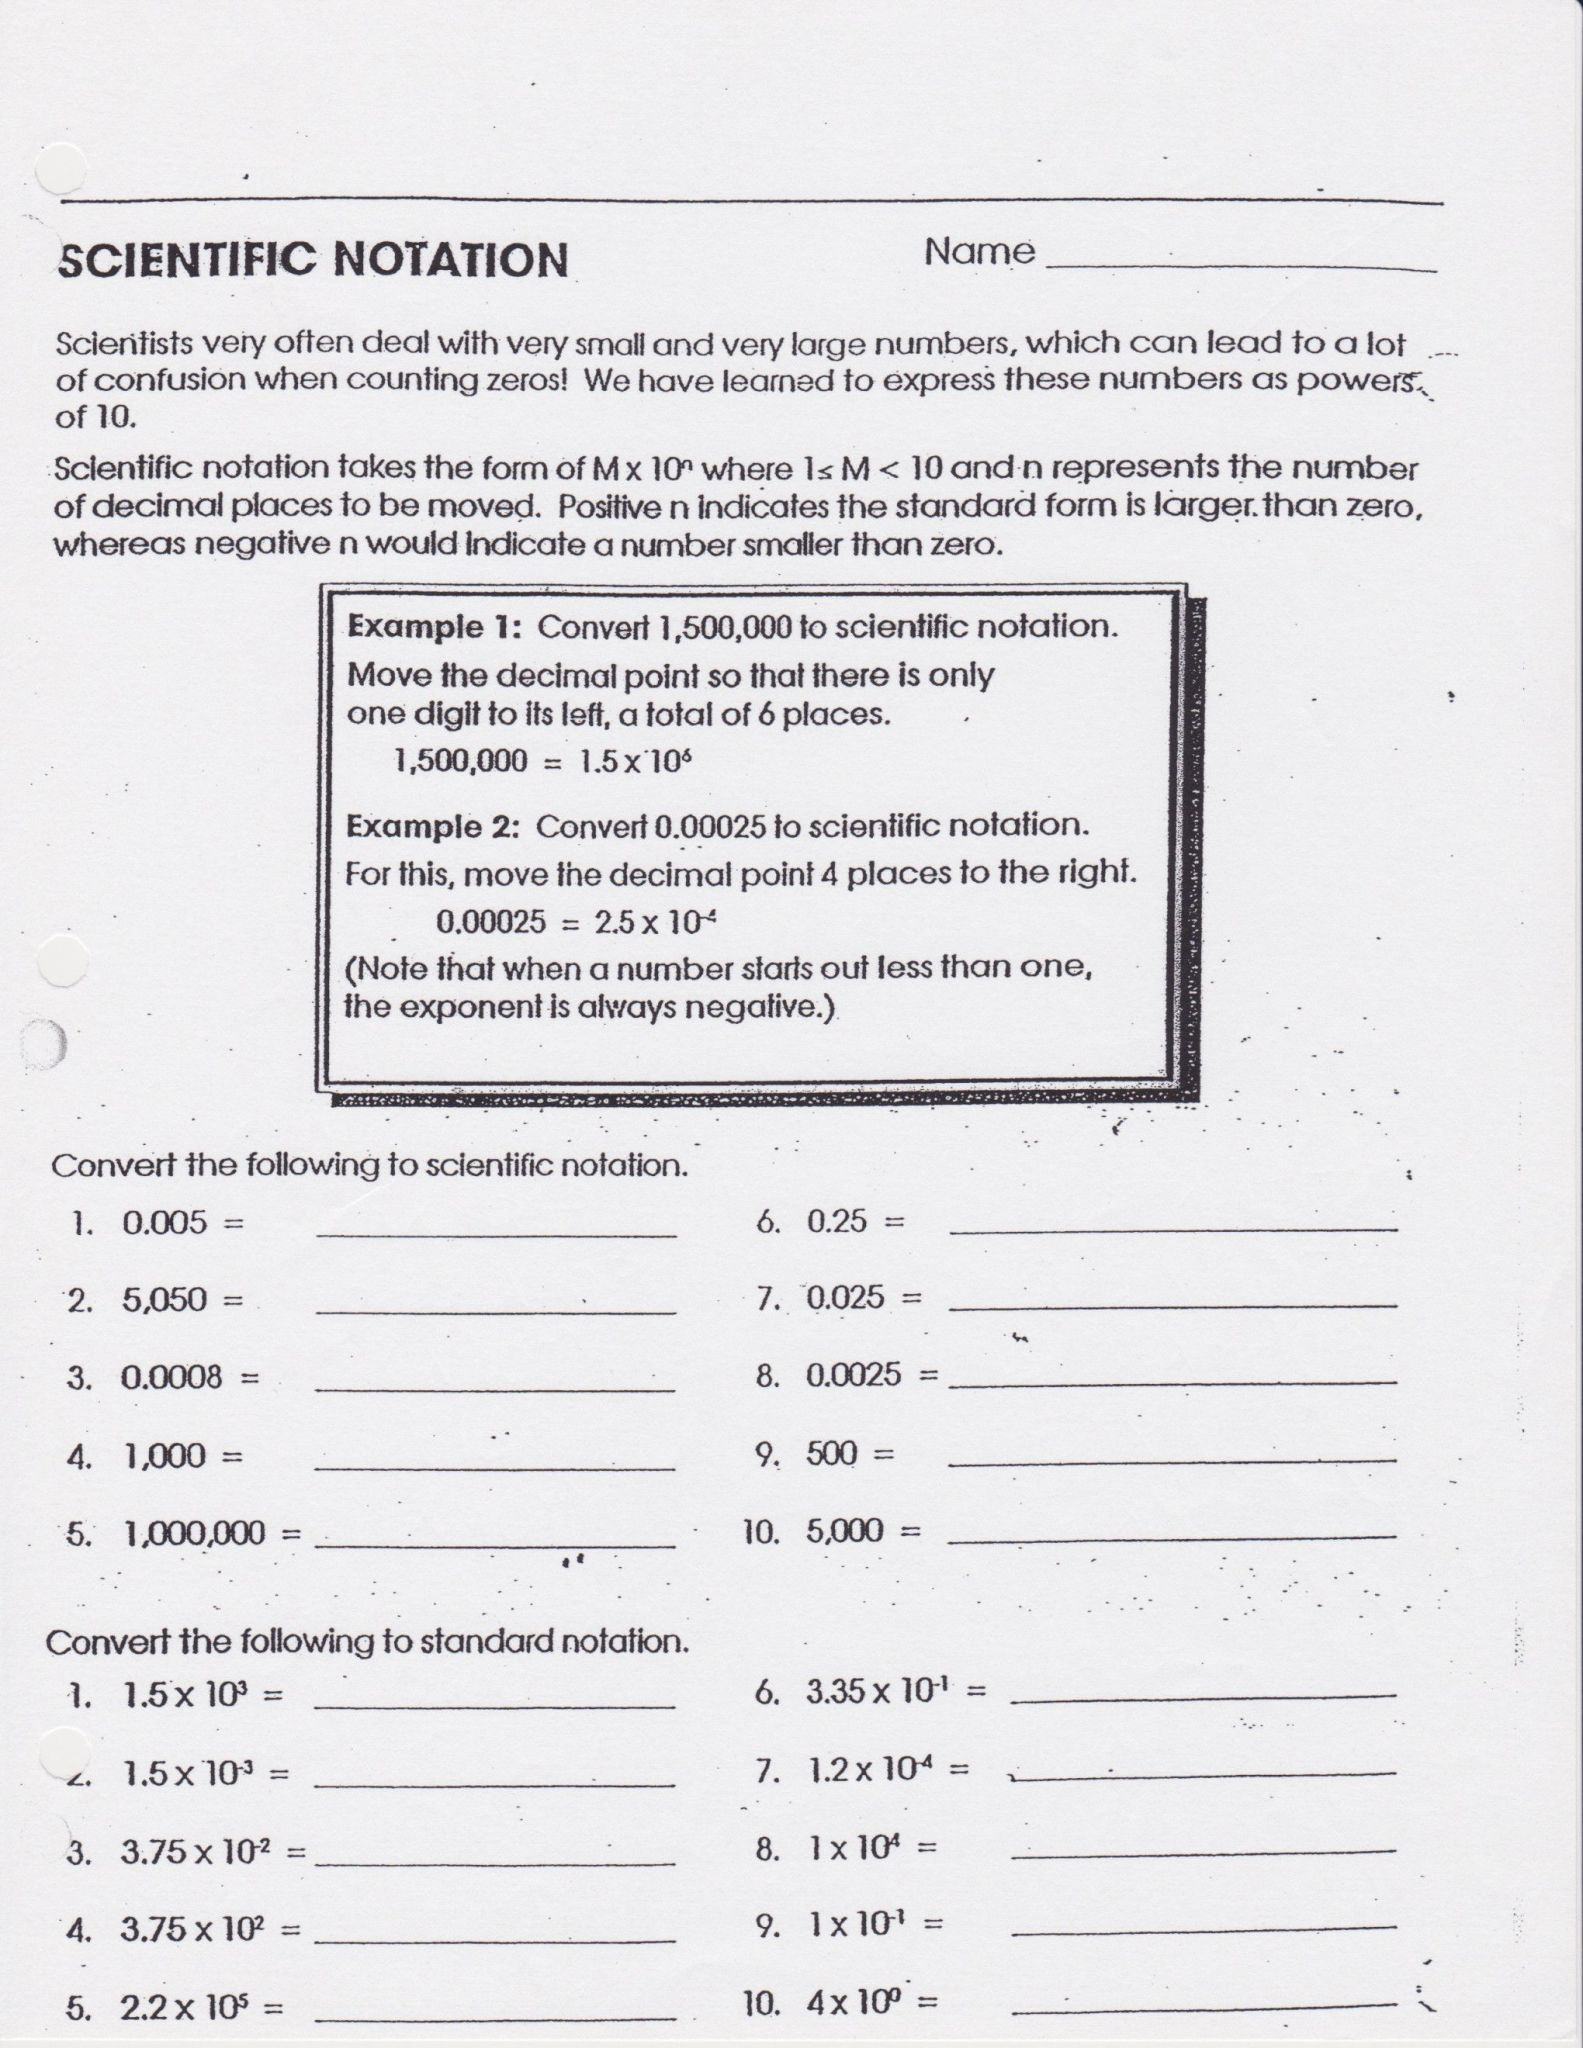 Scientific Notation Worksheet Chemistry